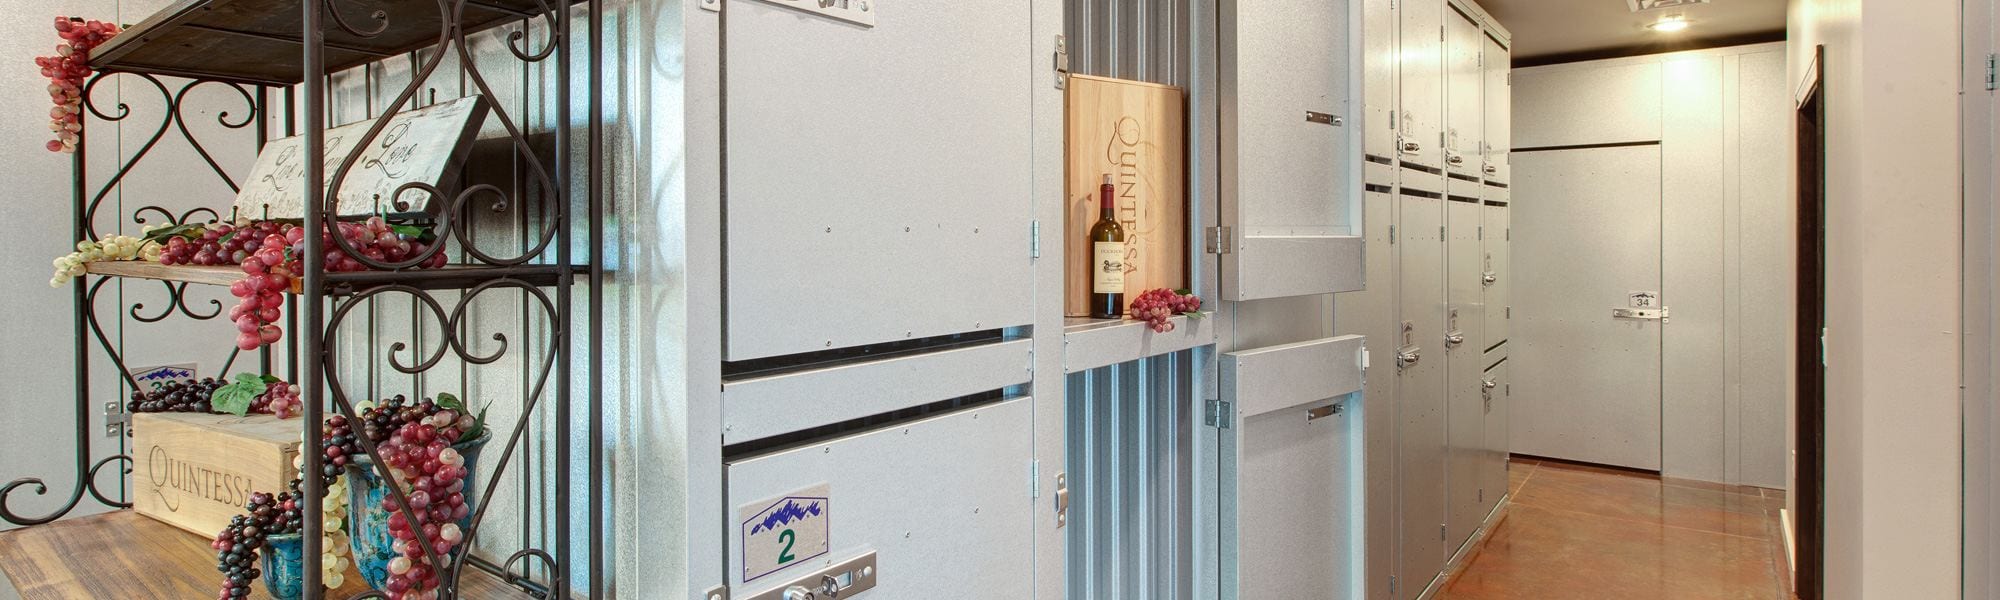 image of wine storage